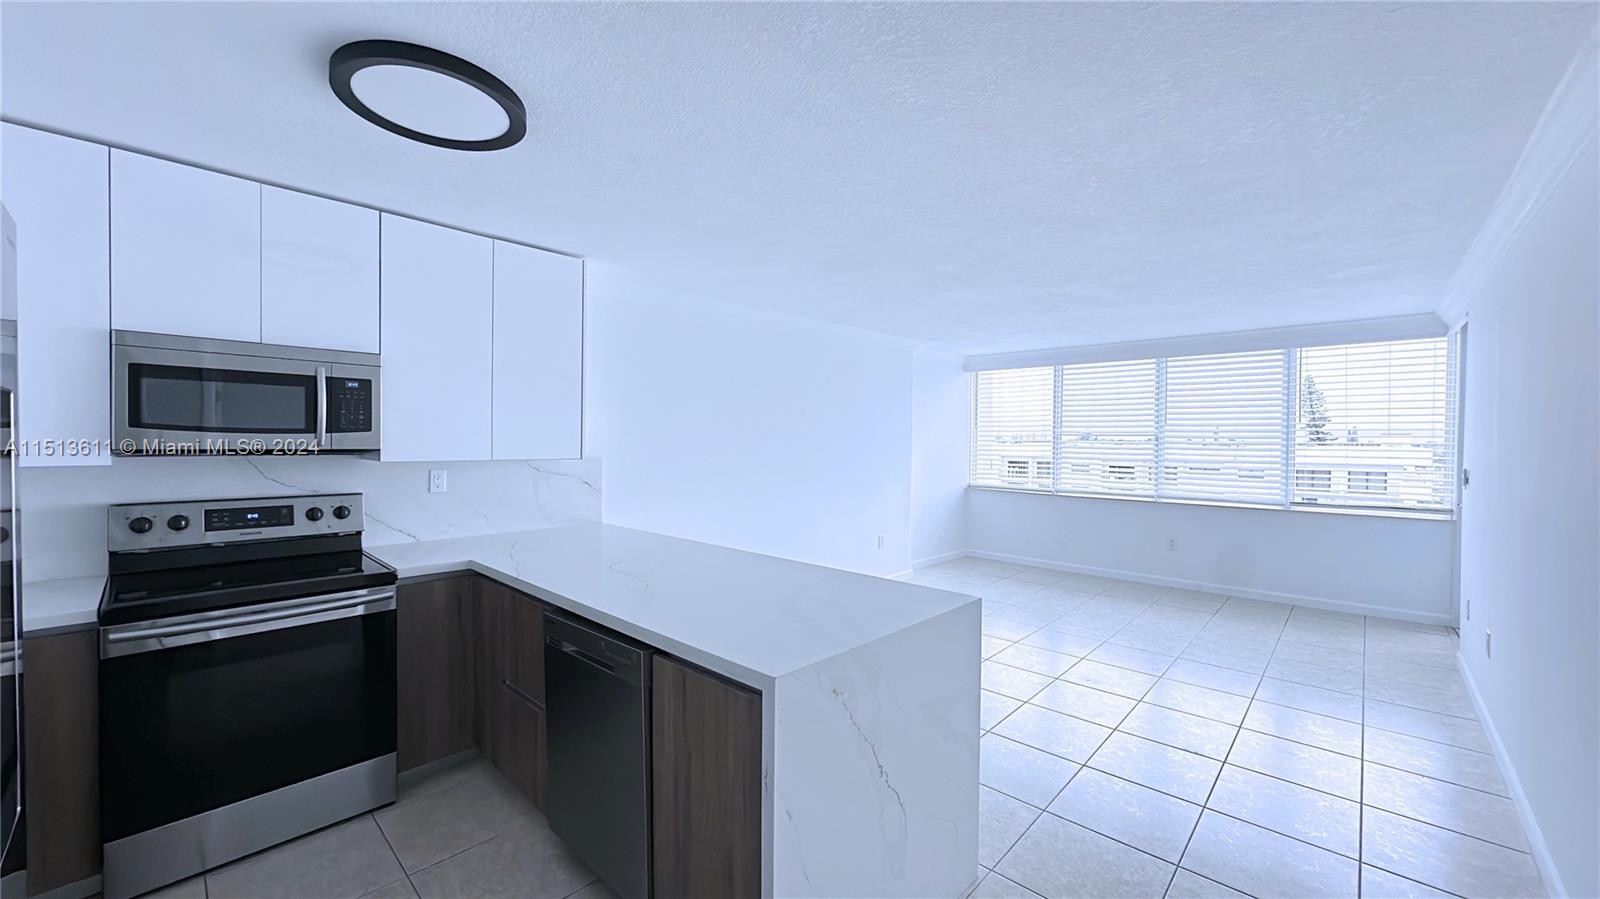 Rental Property at 8233 Harding Ave 606, Miami Beach, Miami-Dade County, Florida - Bedrooms: 2 
Bathrooms: 2  - $2,950 MO.